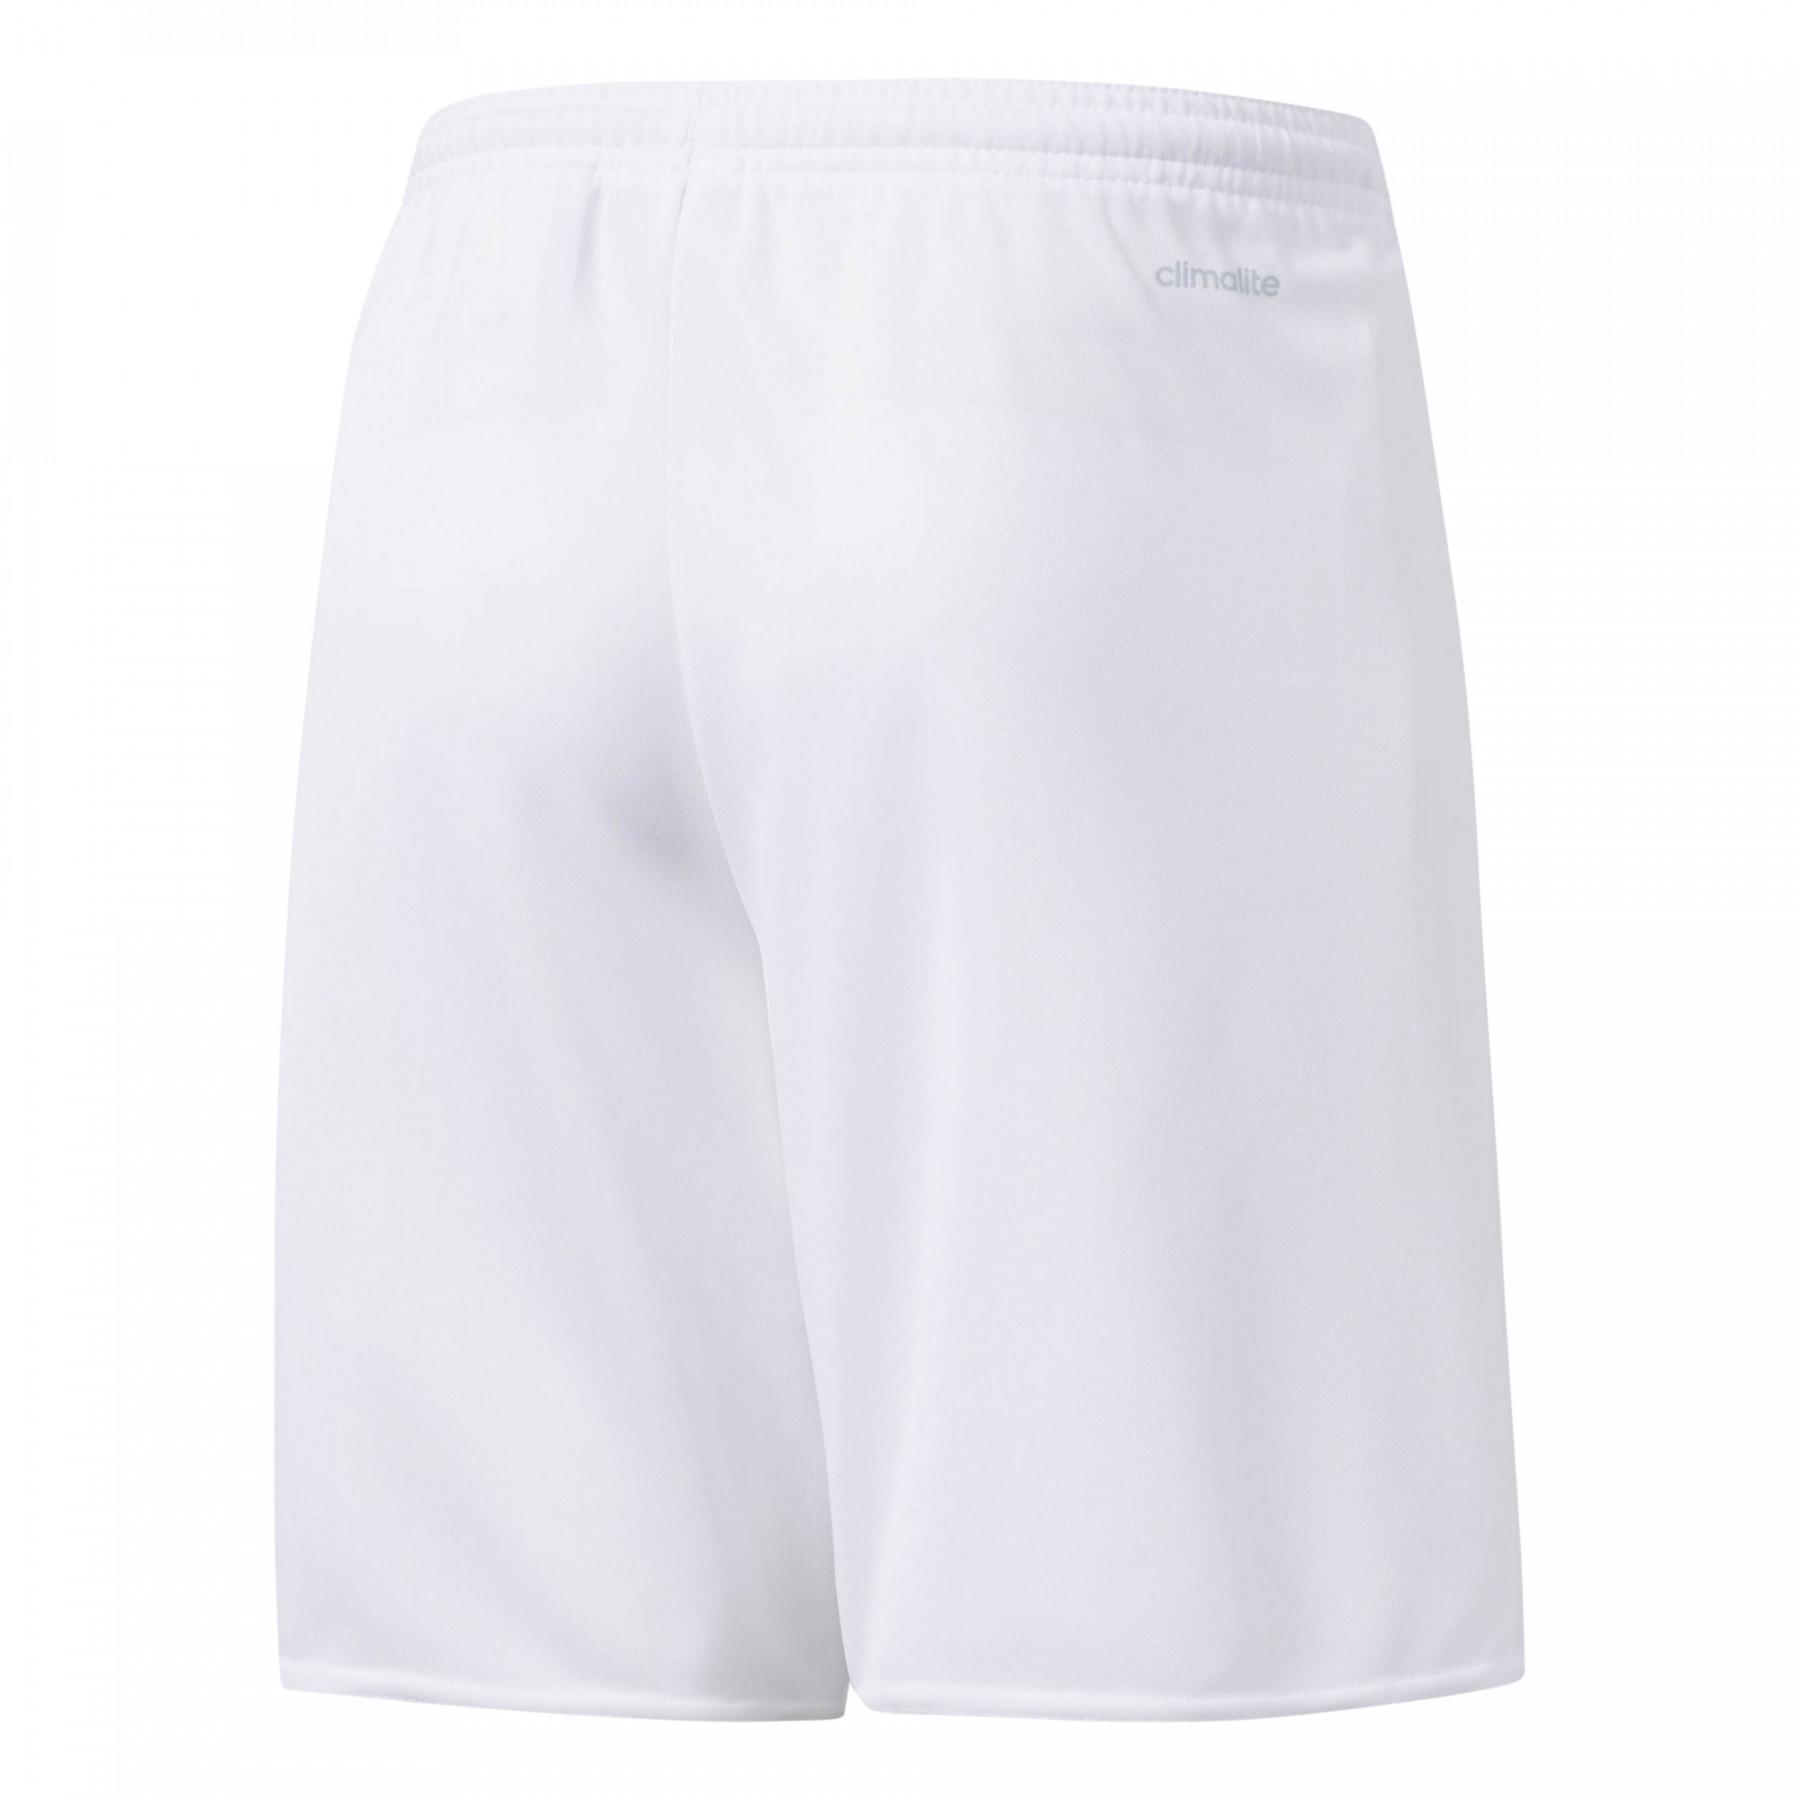 Children's shorts adidas Parma 16